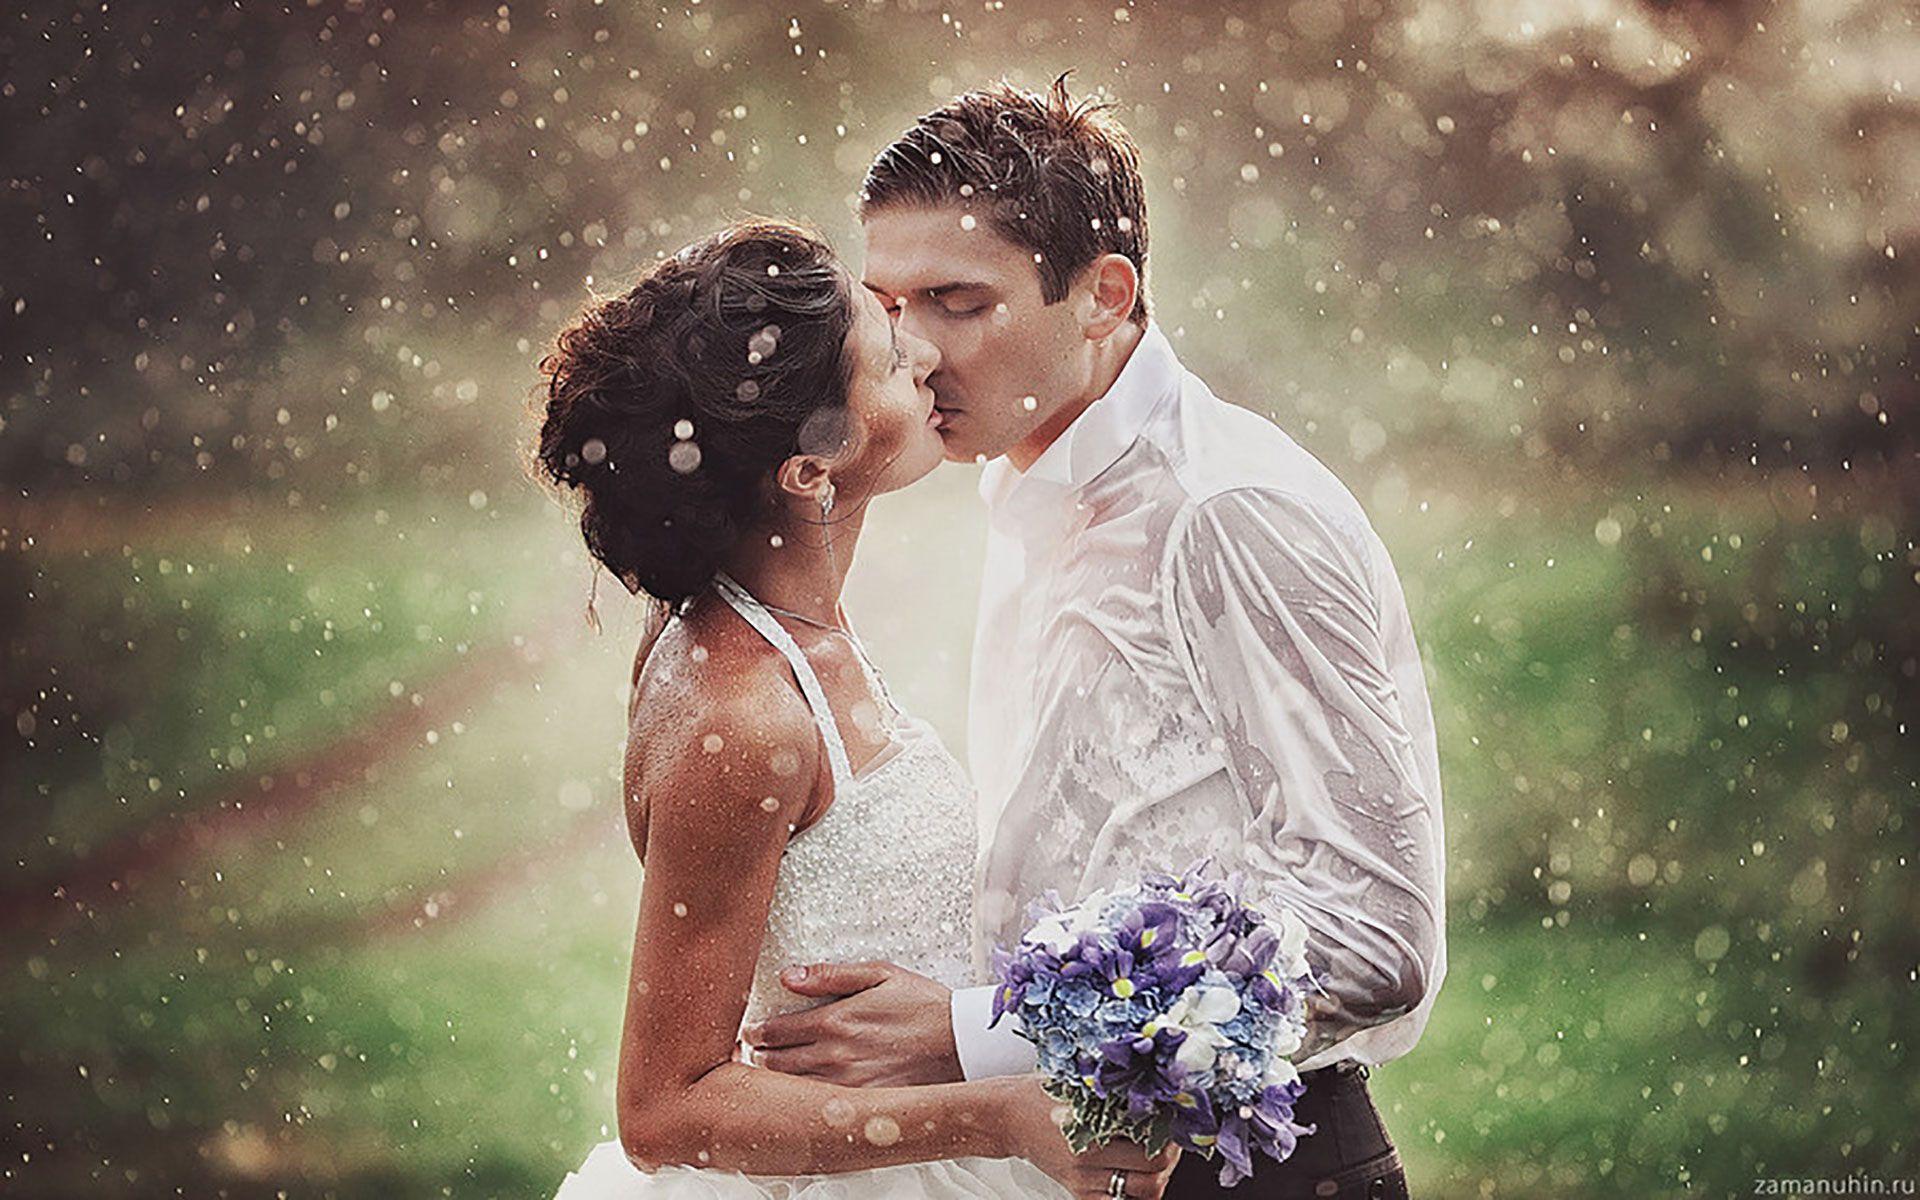 Romantic Couple Kissing In Rain